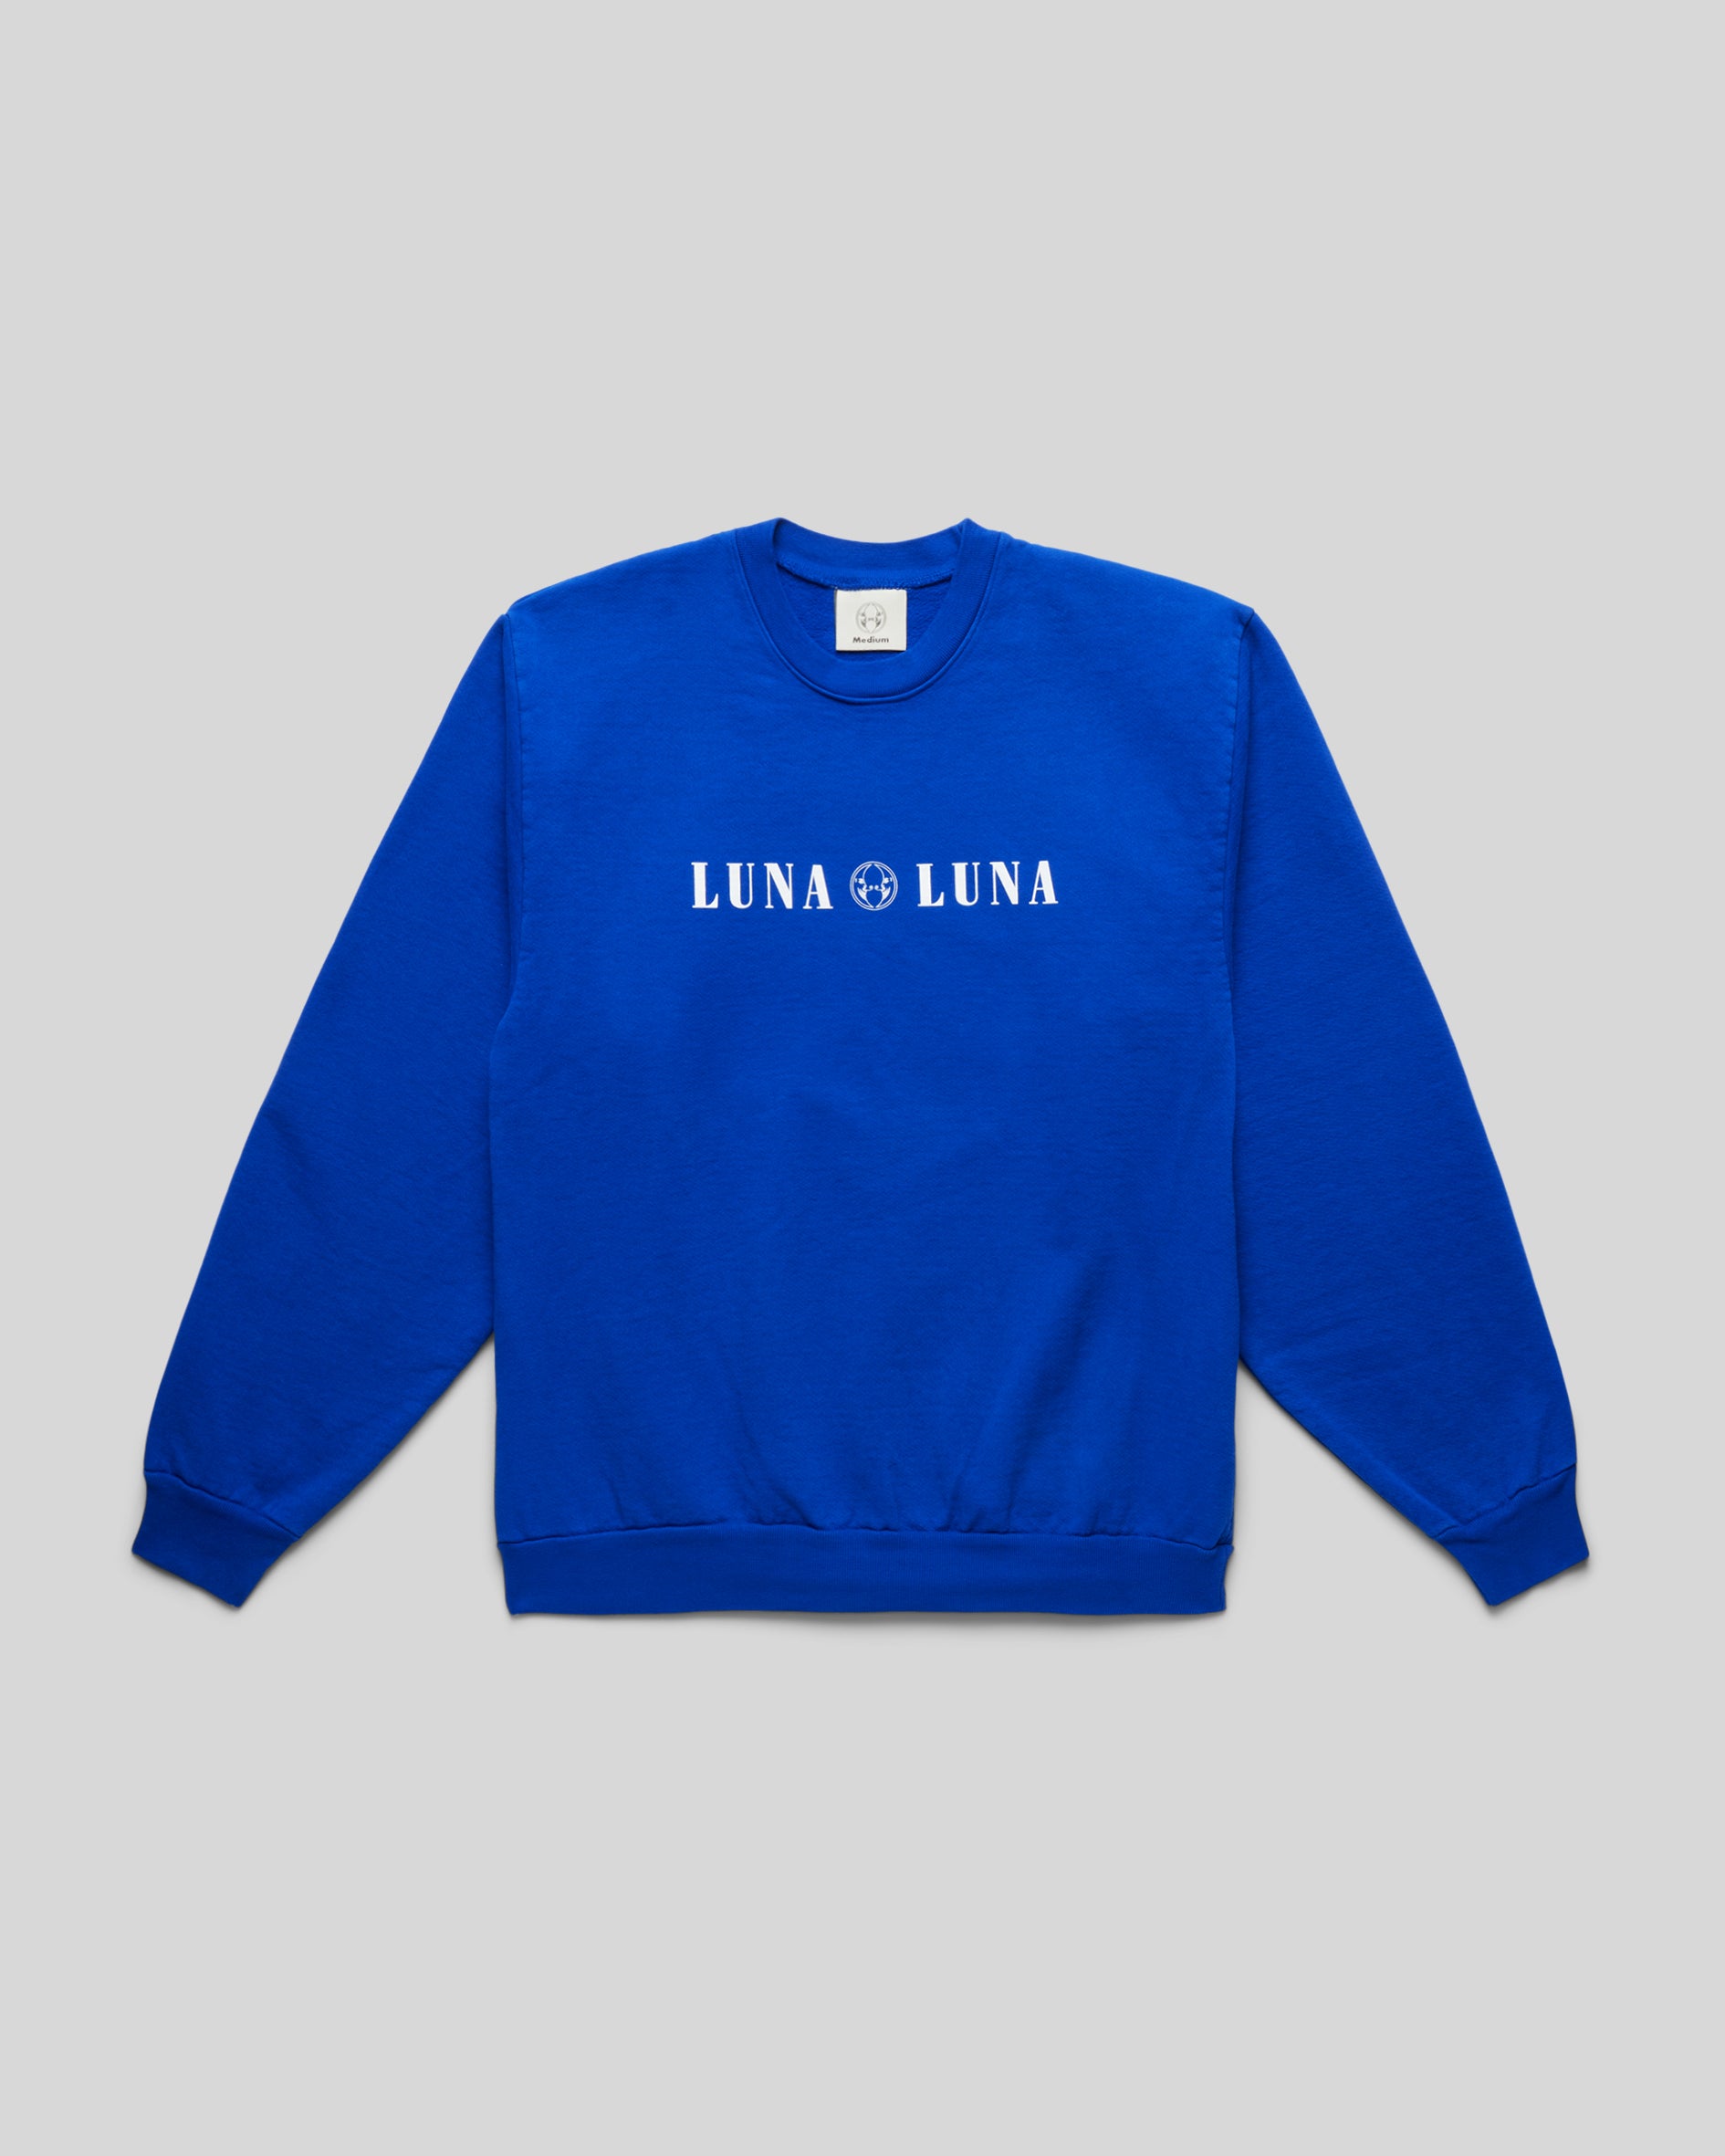 Flat front photo of the 1987 Logo Crewneck, cobalt blue sweatshirt with Luna Luna logo